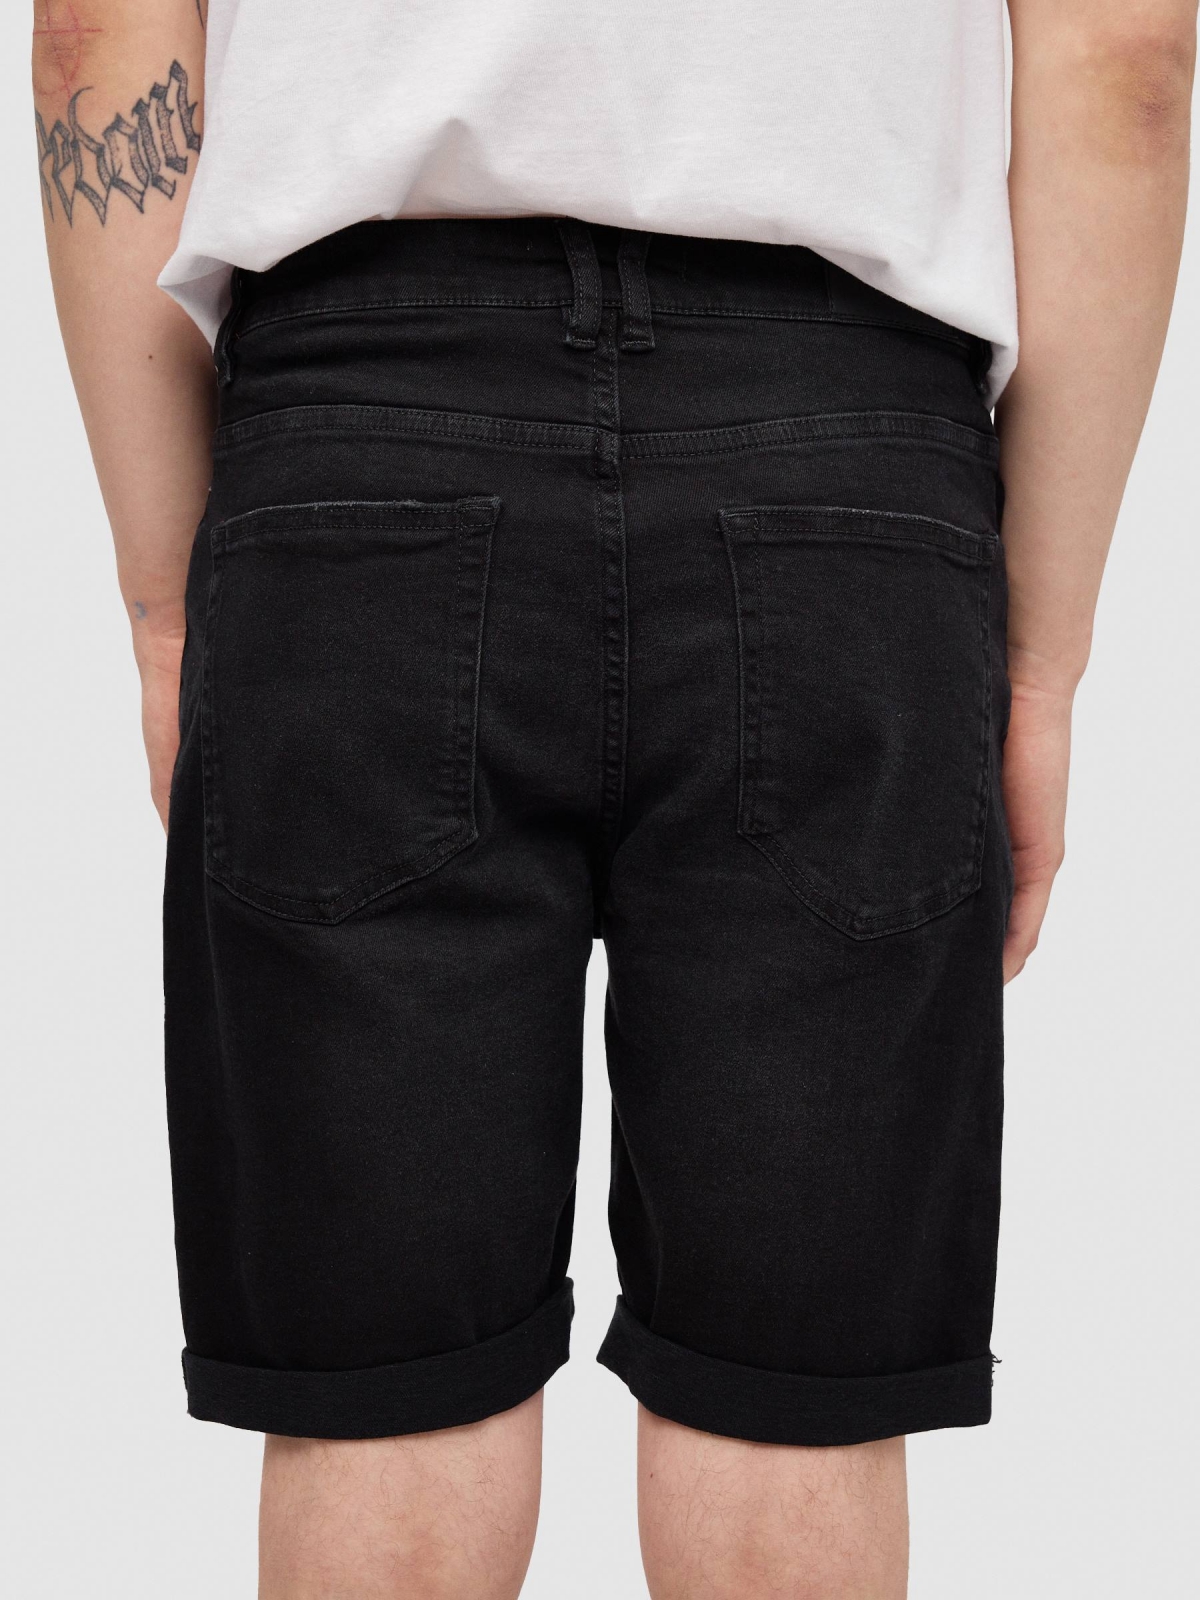 Black denim slim shorts black detail view